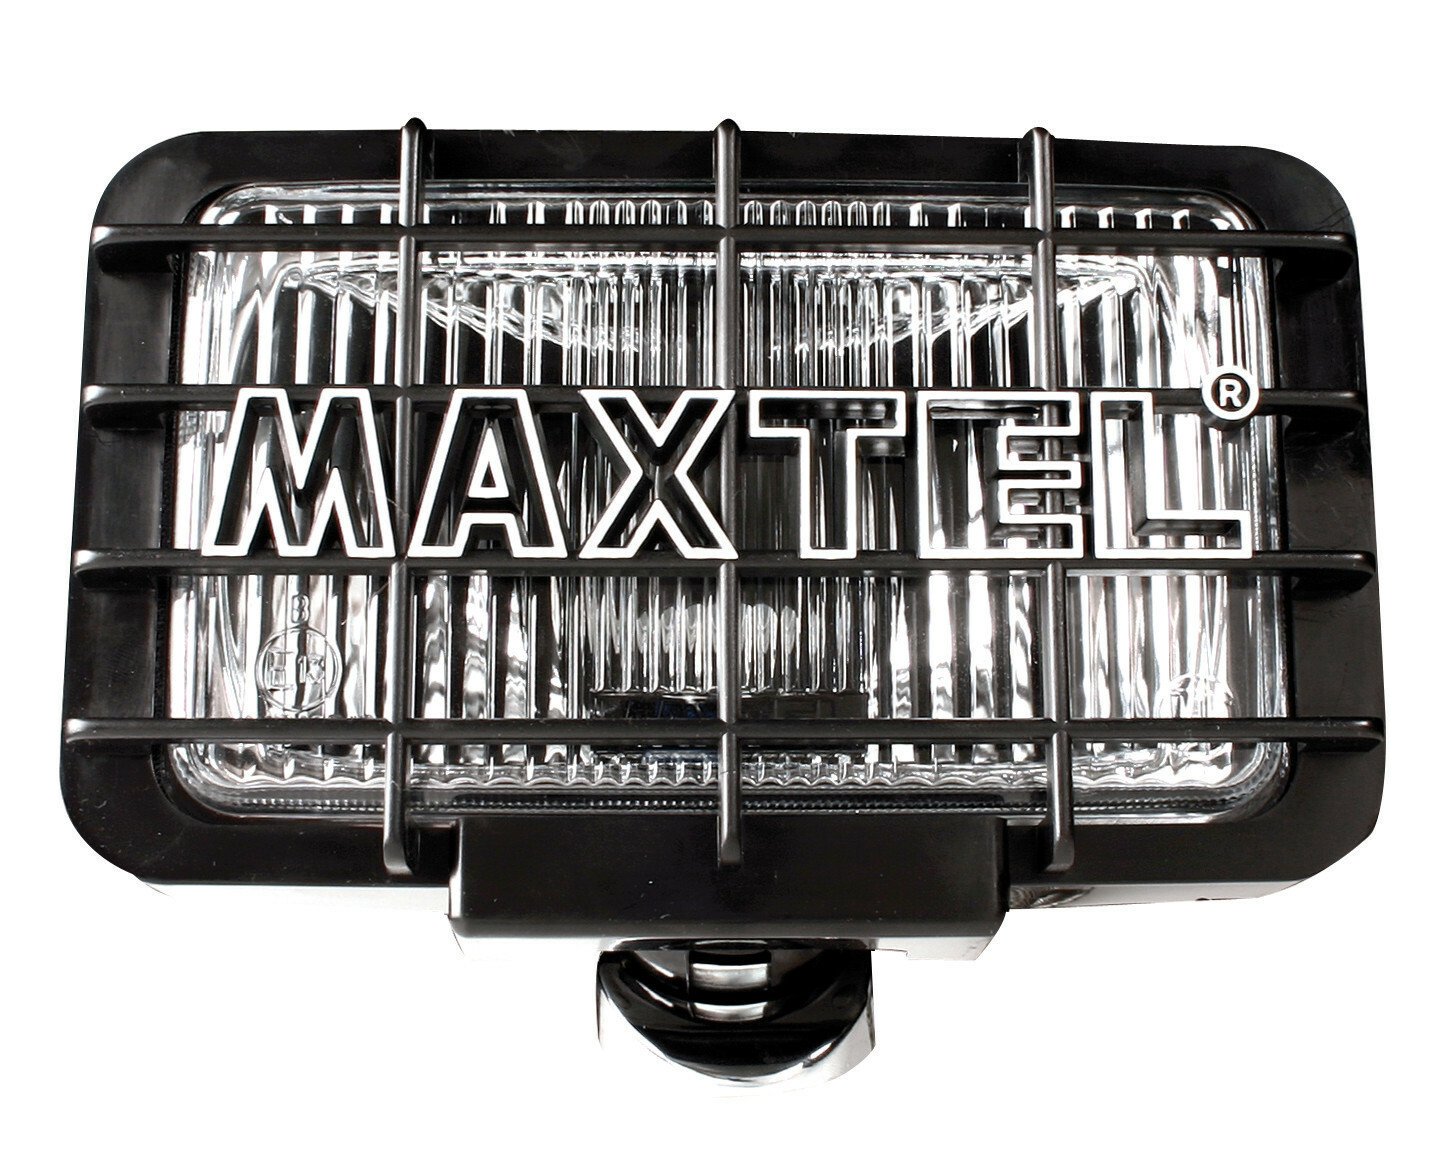 Stainless steel rectangular projector Maxtel 1pc - Fog thumb